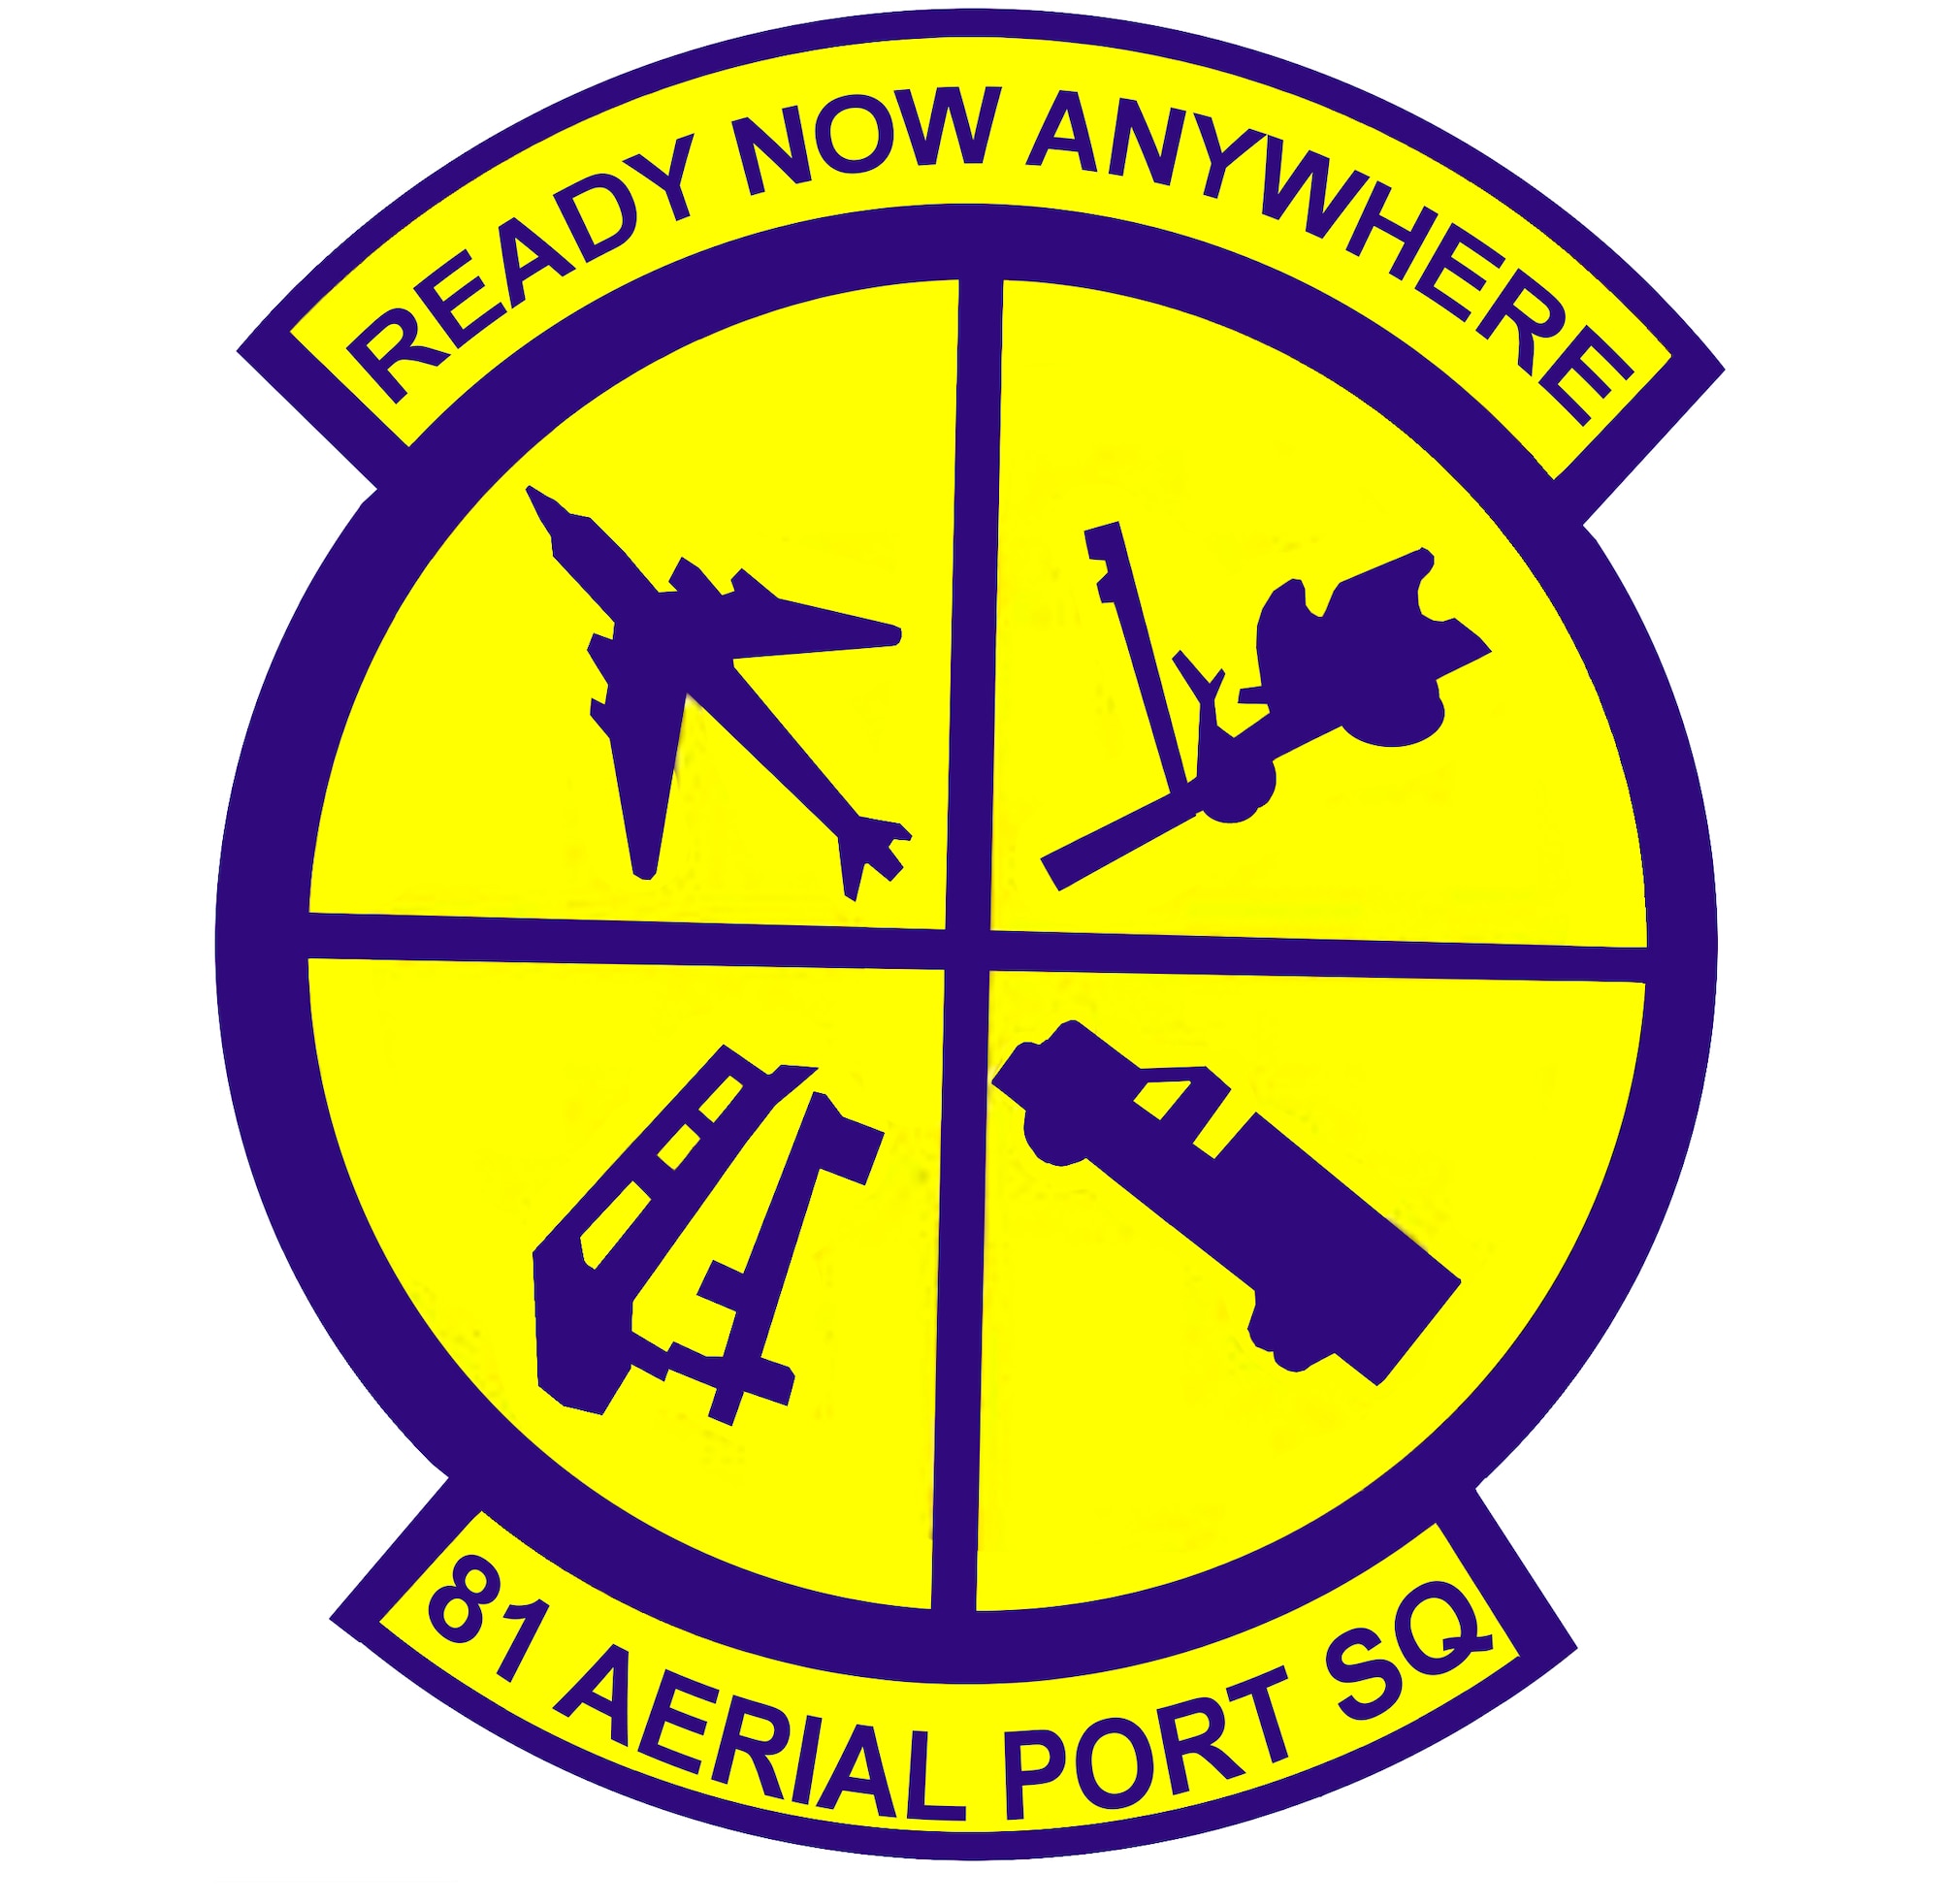 81st Aerial Port Squadron Patch